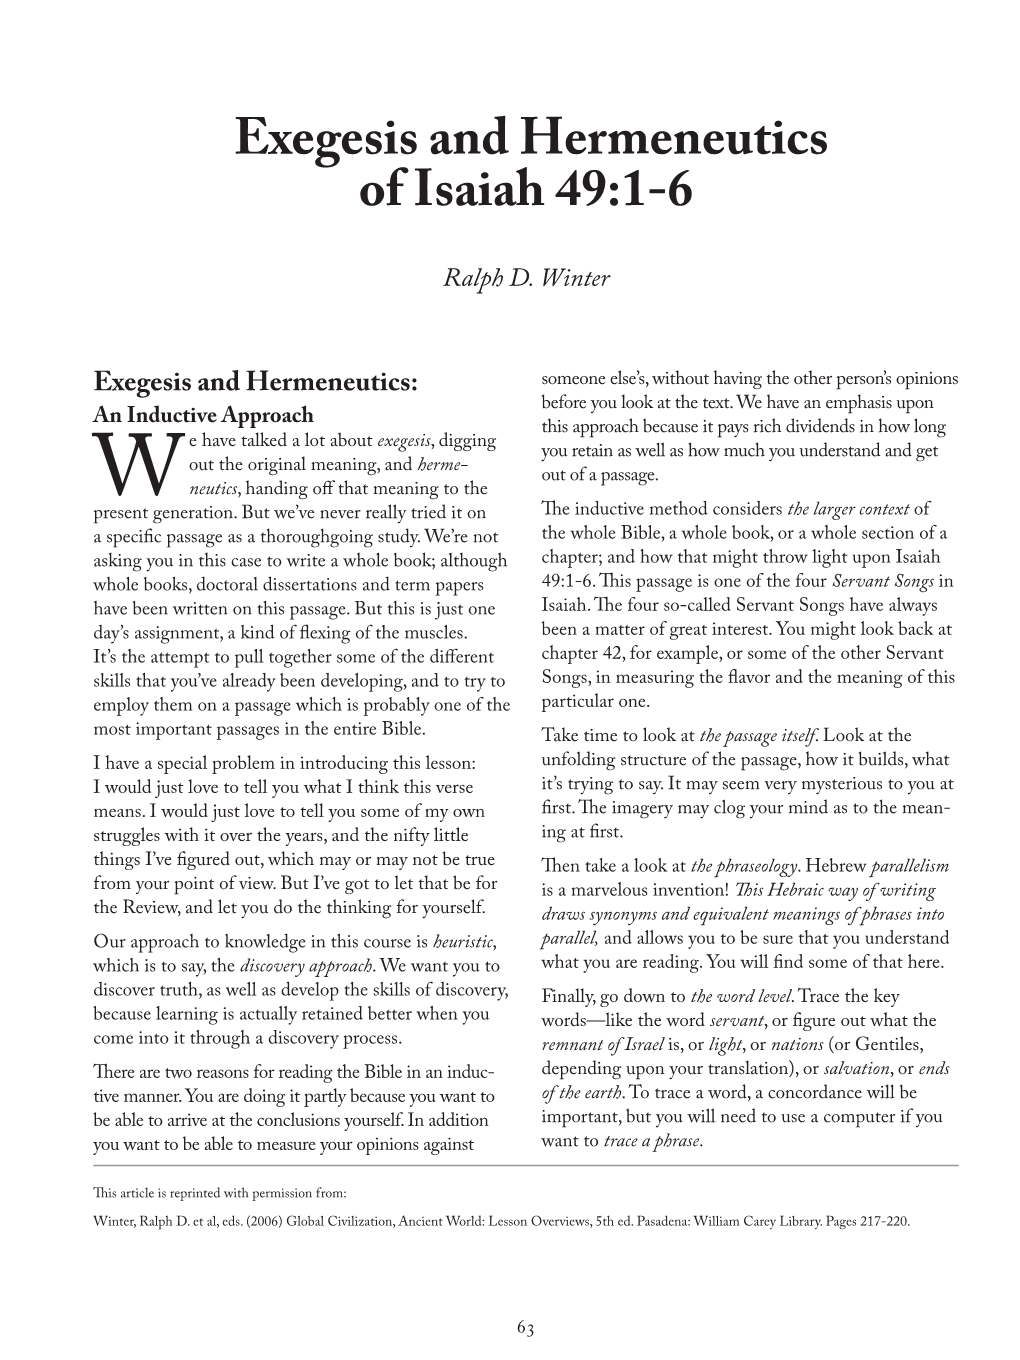 Exegesis and Hermeneutics of Isaiah 49:1-6